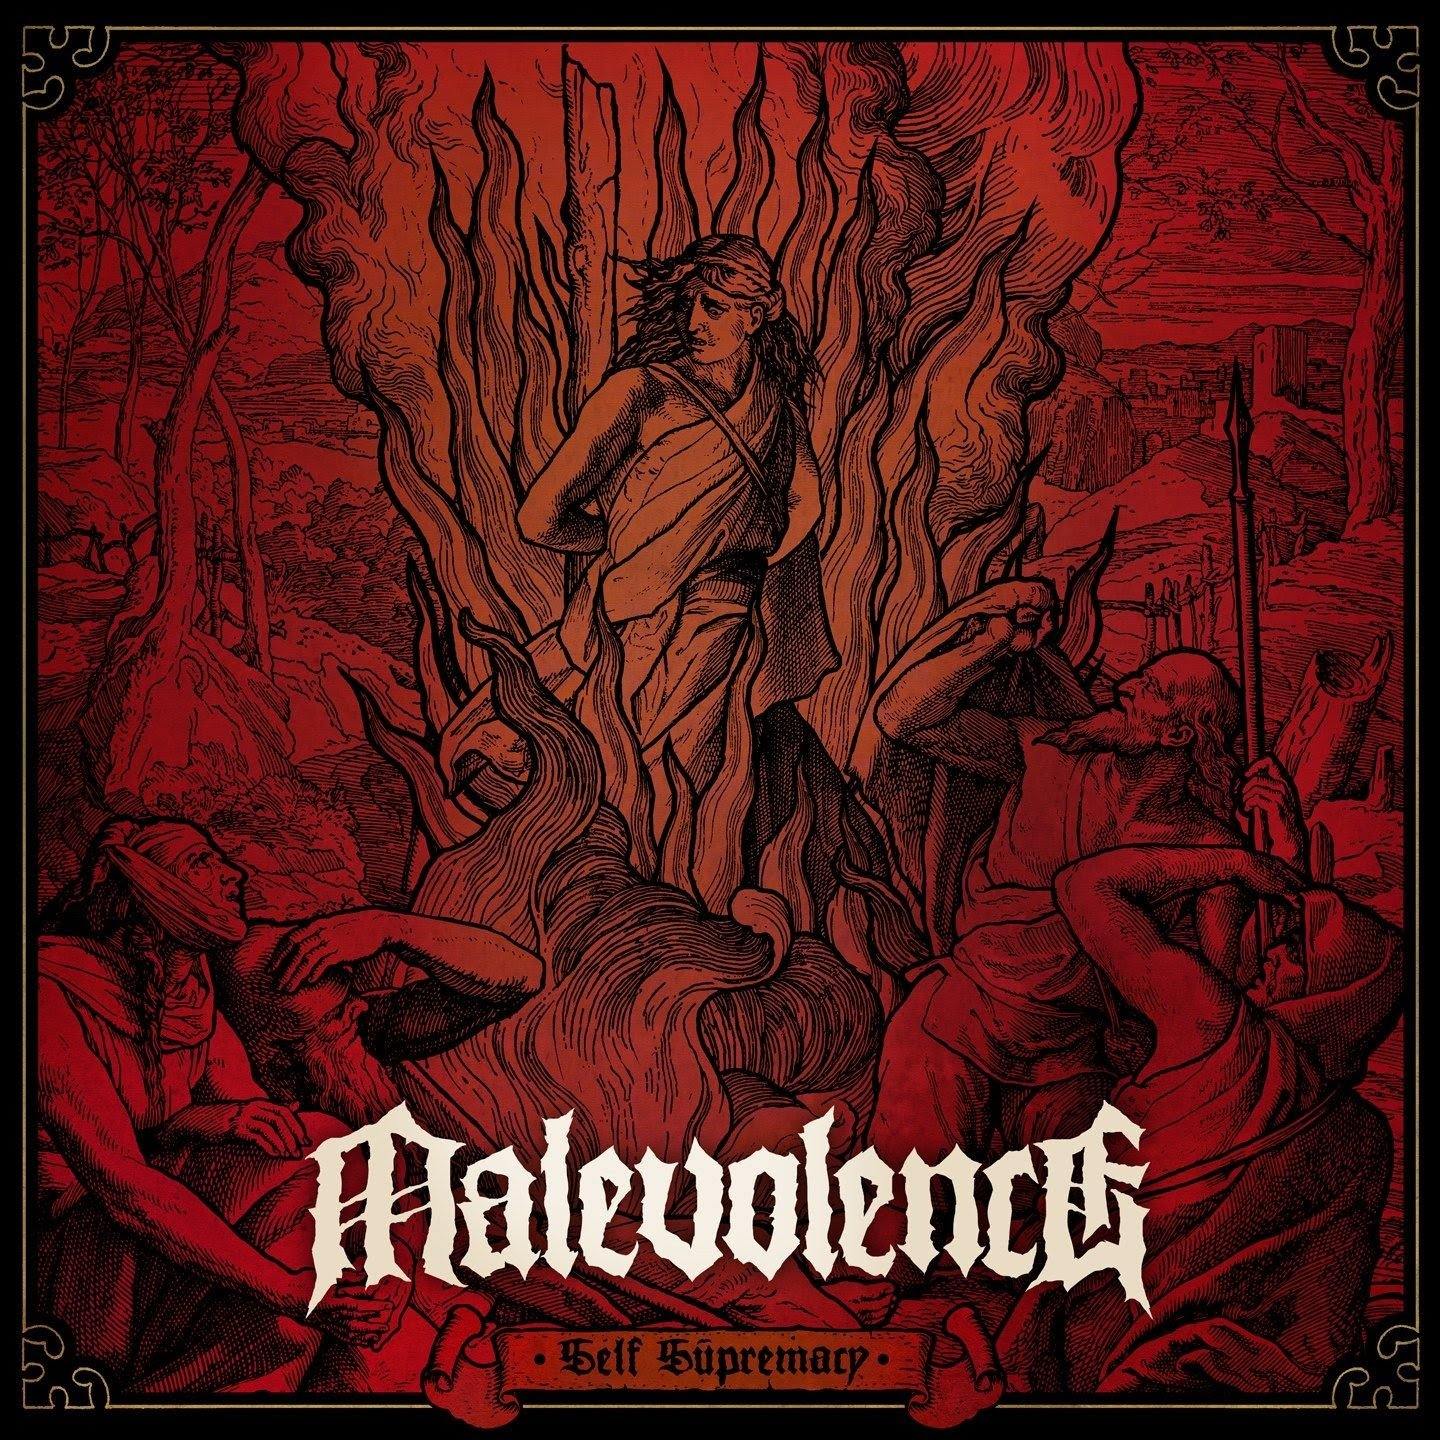 Buy – Malevolence "Self Supremacy" CD – Band & Music Merch – Cold Cuts Merch